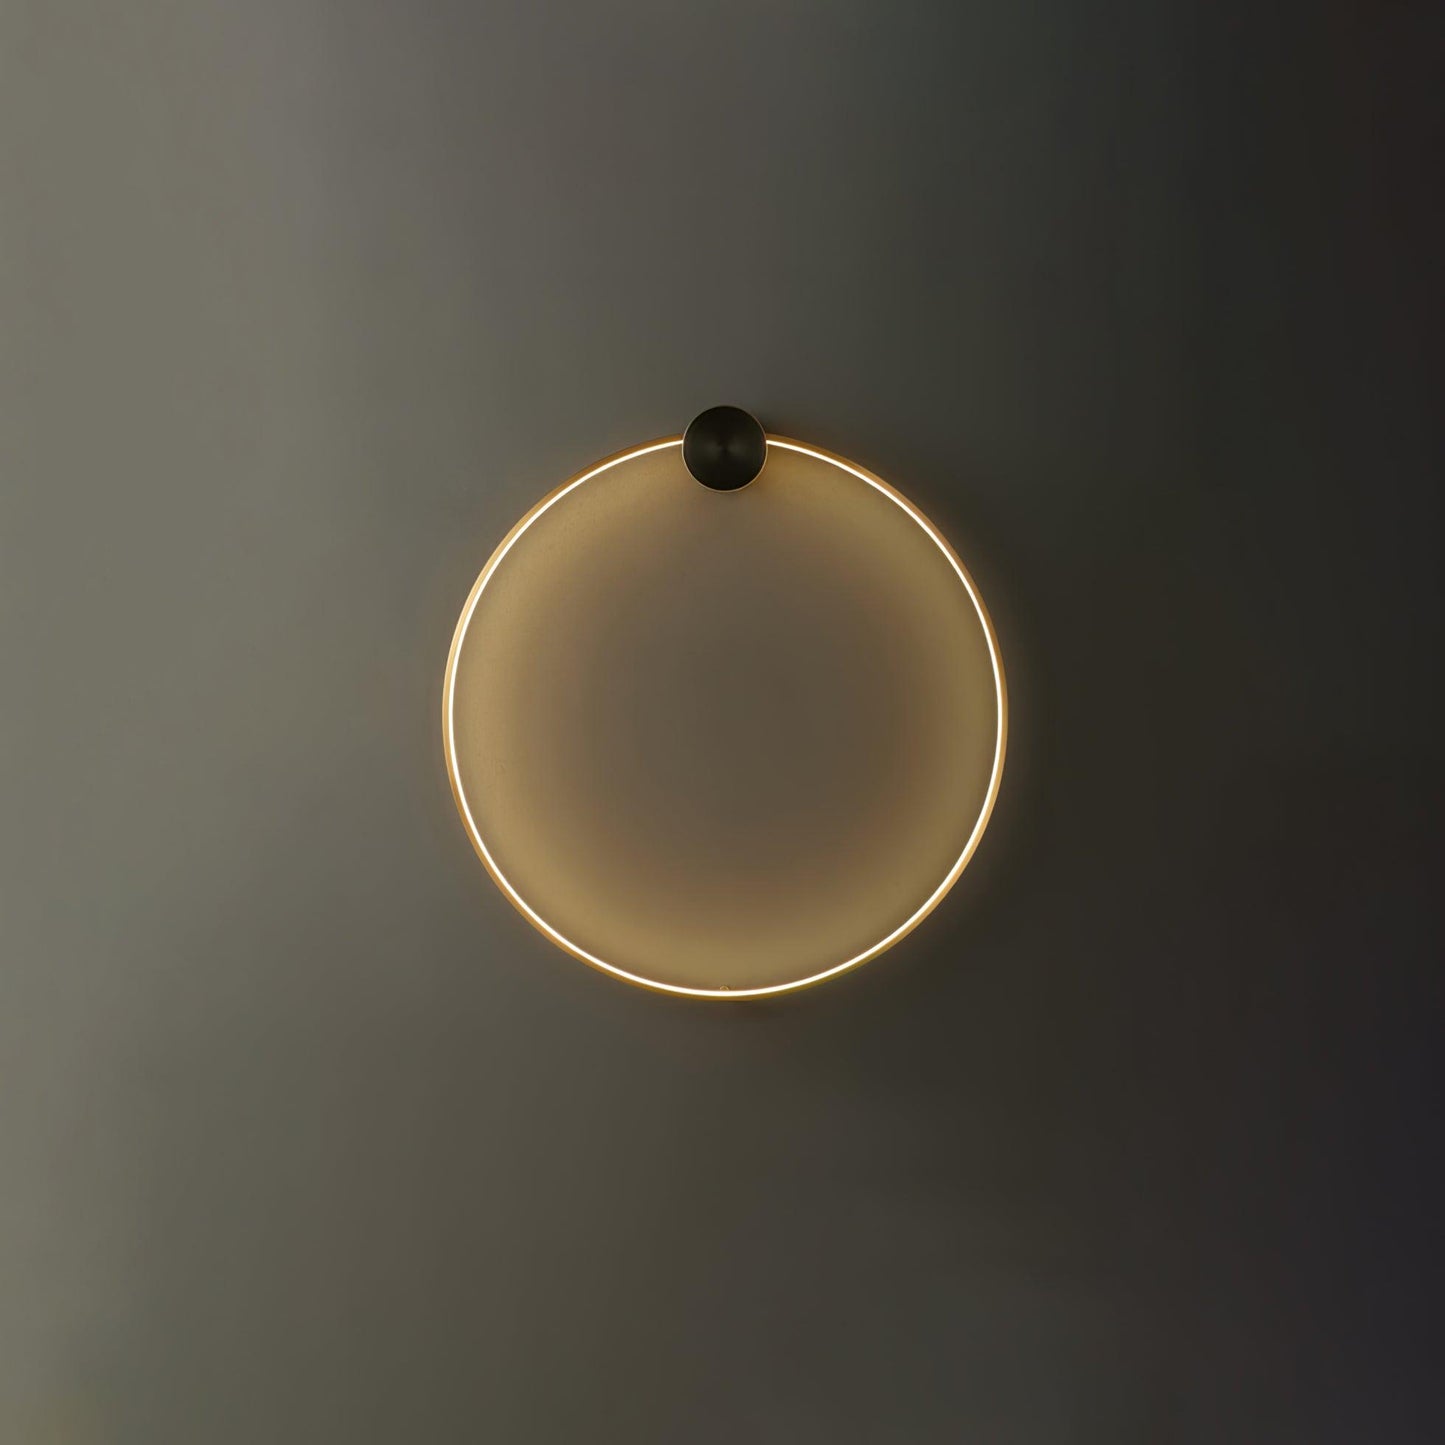 Ring Shaped LED Wall Light